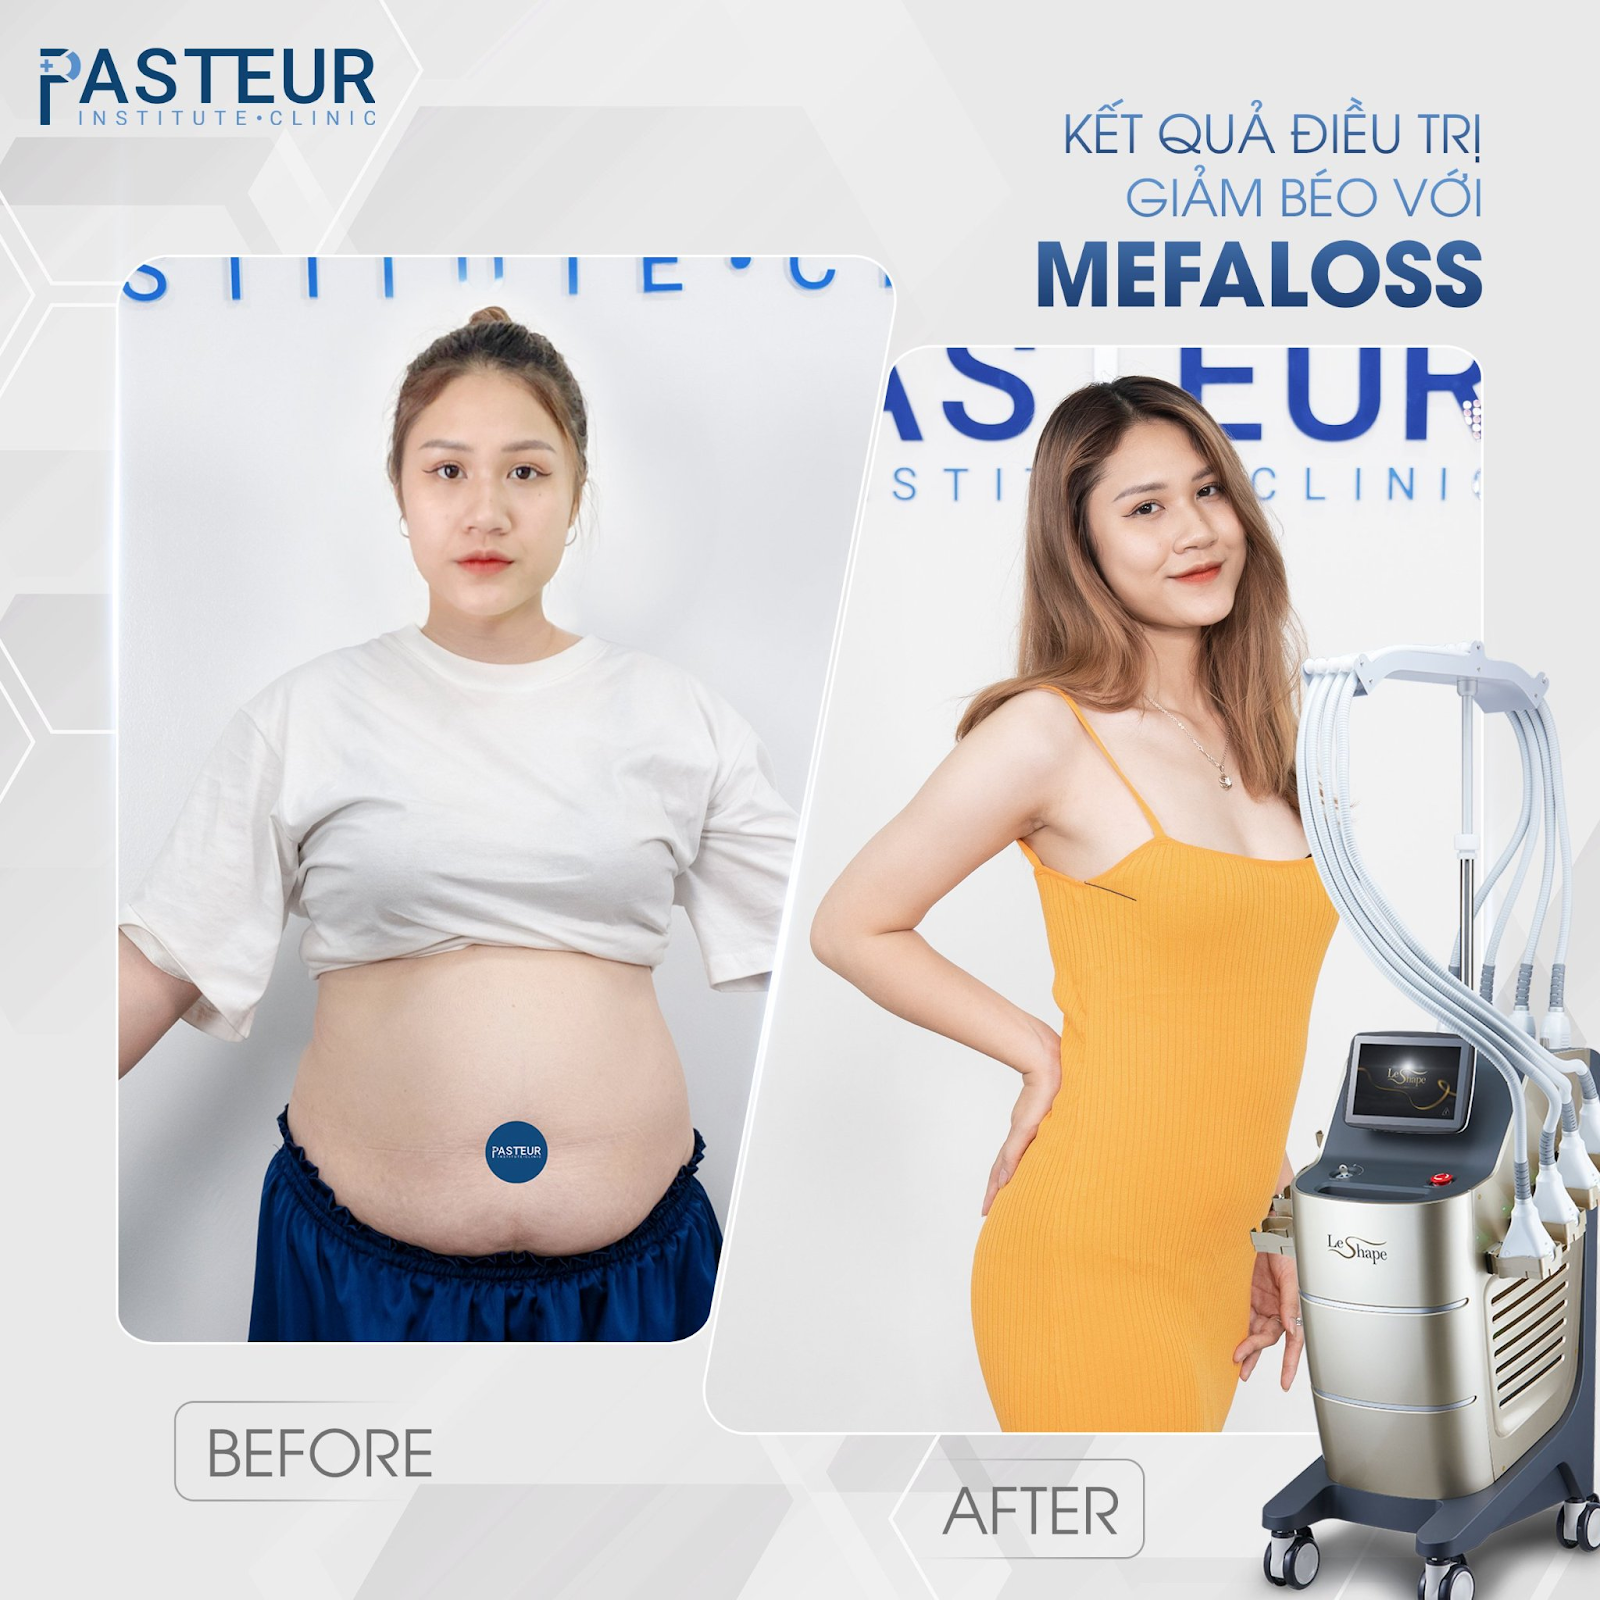 Pasteur giảm béo